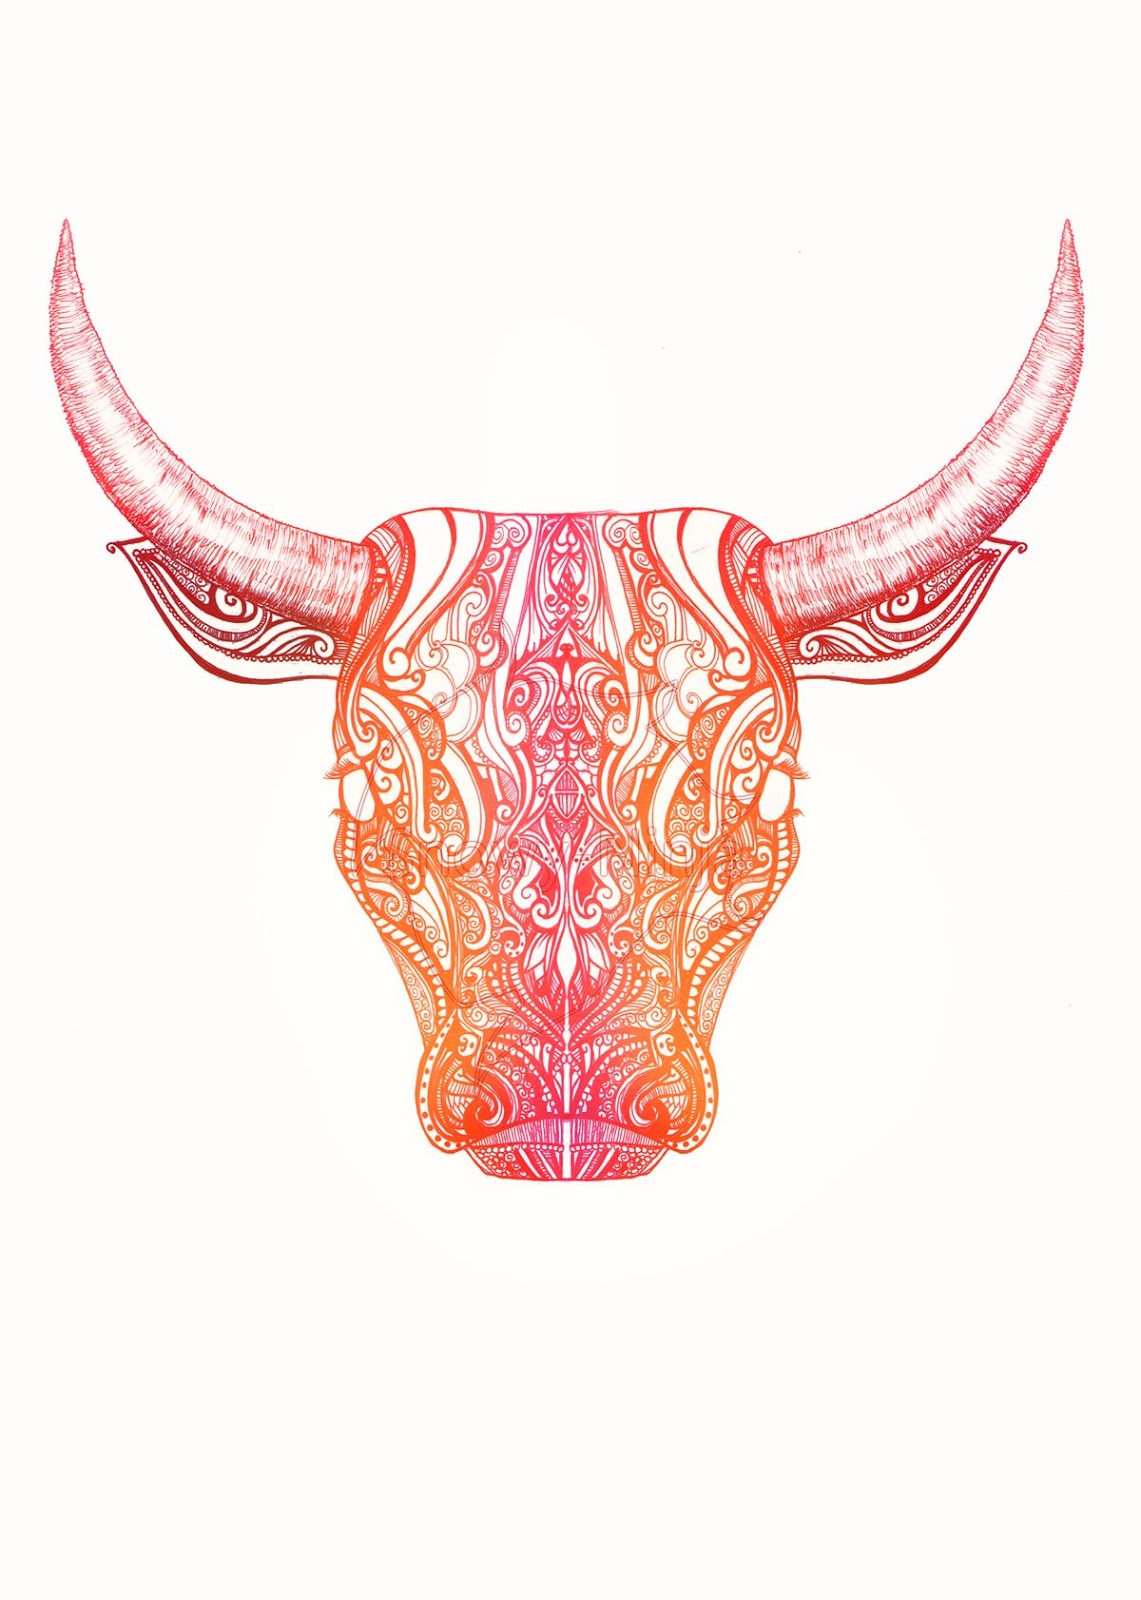 Taurus Zodiac Symbol Horoscope Tattoos (7)